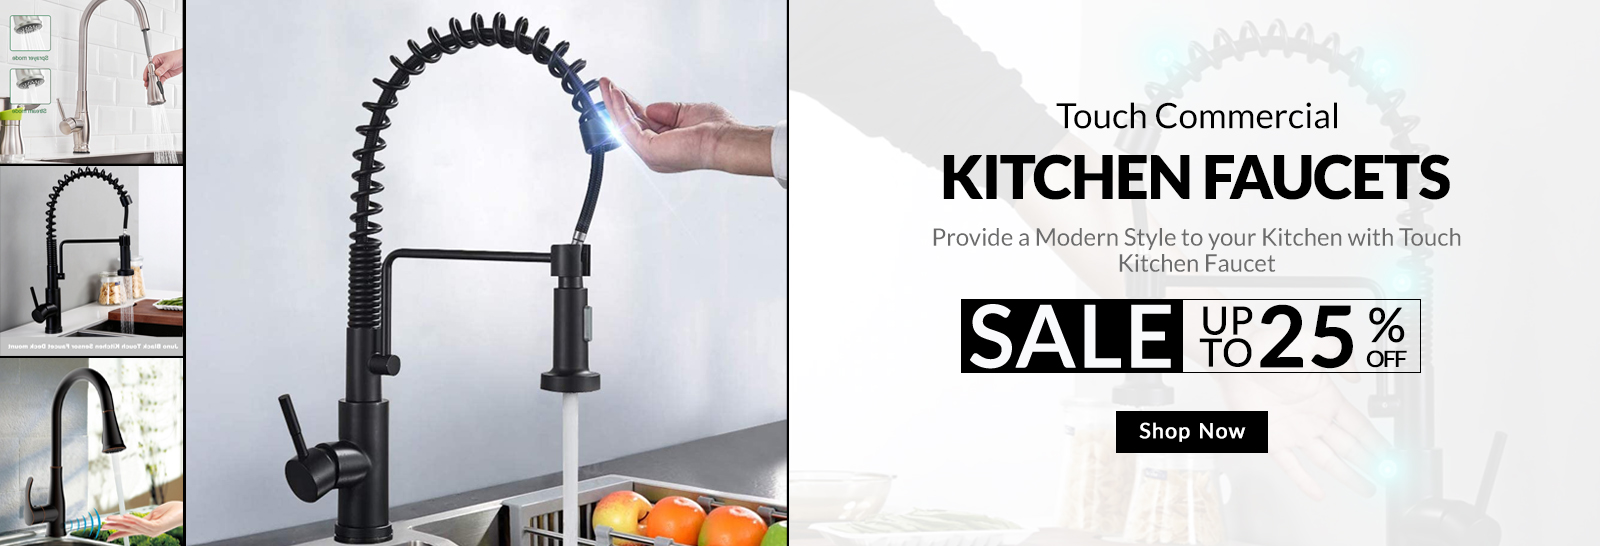 Commercial Touch Kitchen Faucet